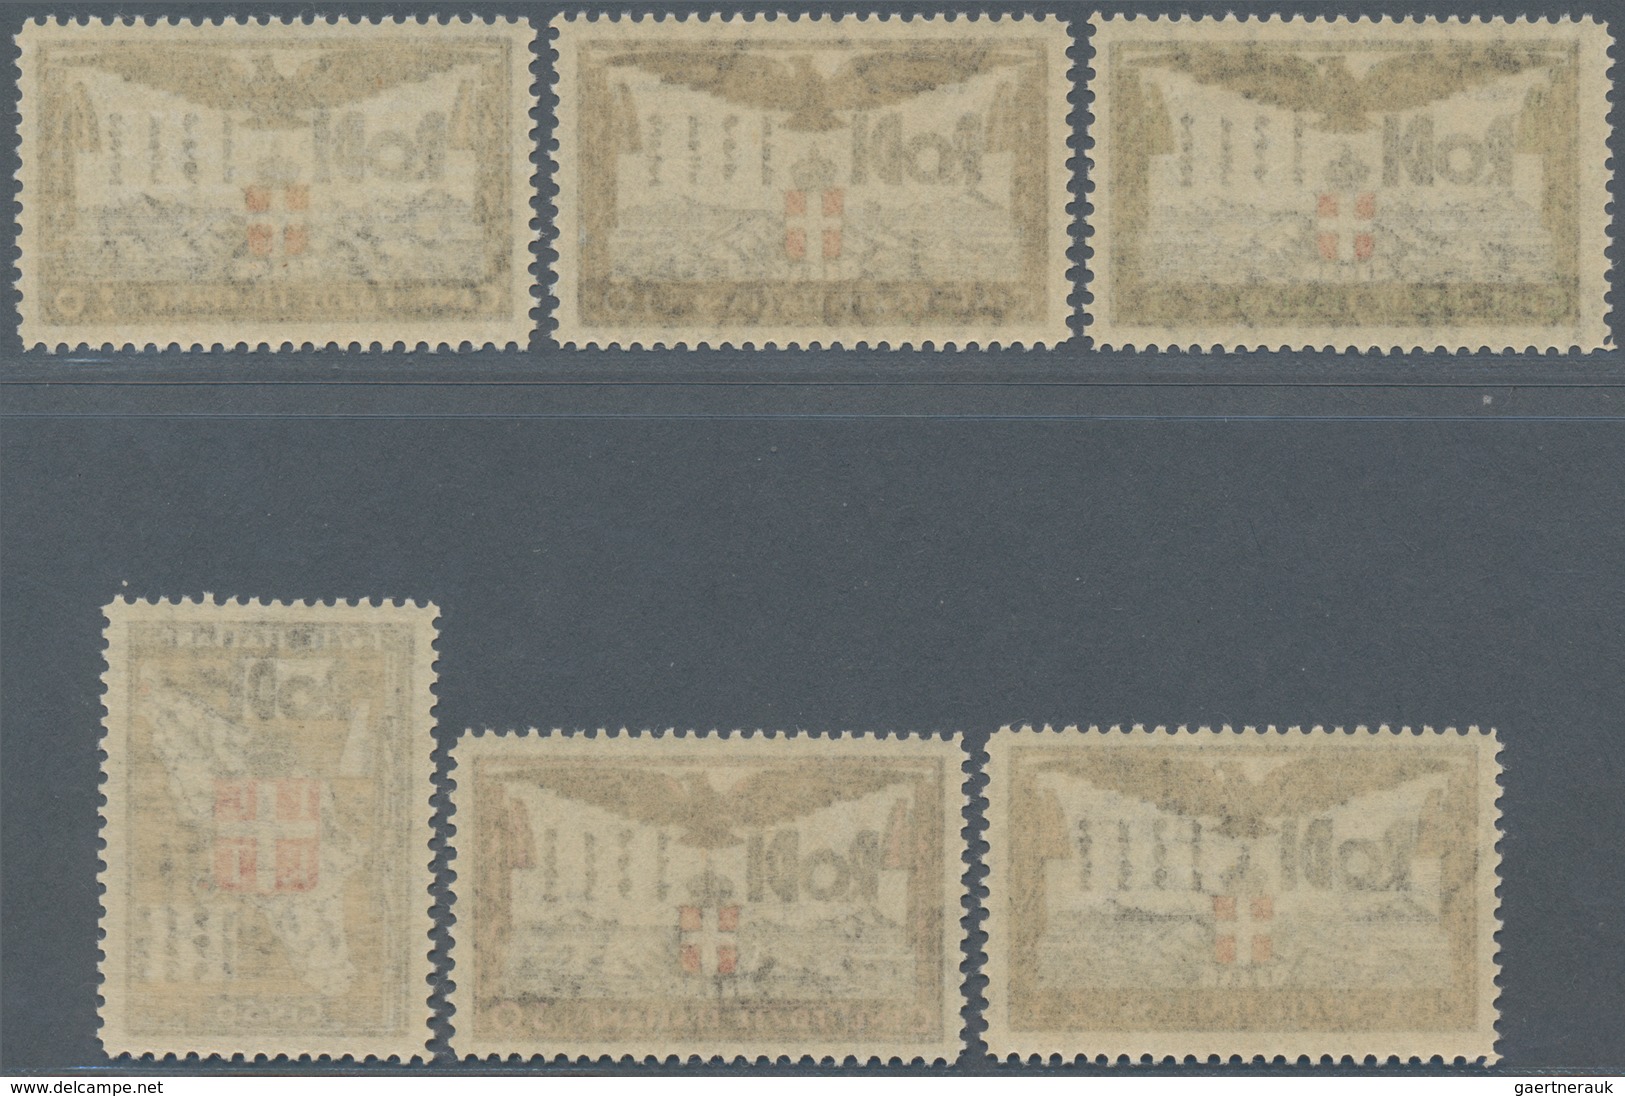 Ägäische Inseln: RODI: 1932, 5 C To 25 L Ten Stamps Mint Never Hinged, Very Small Edition - Ägäis